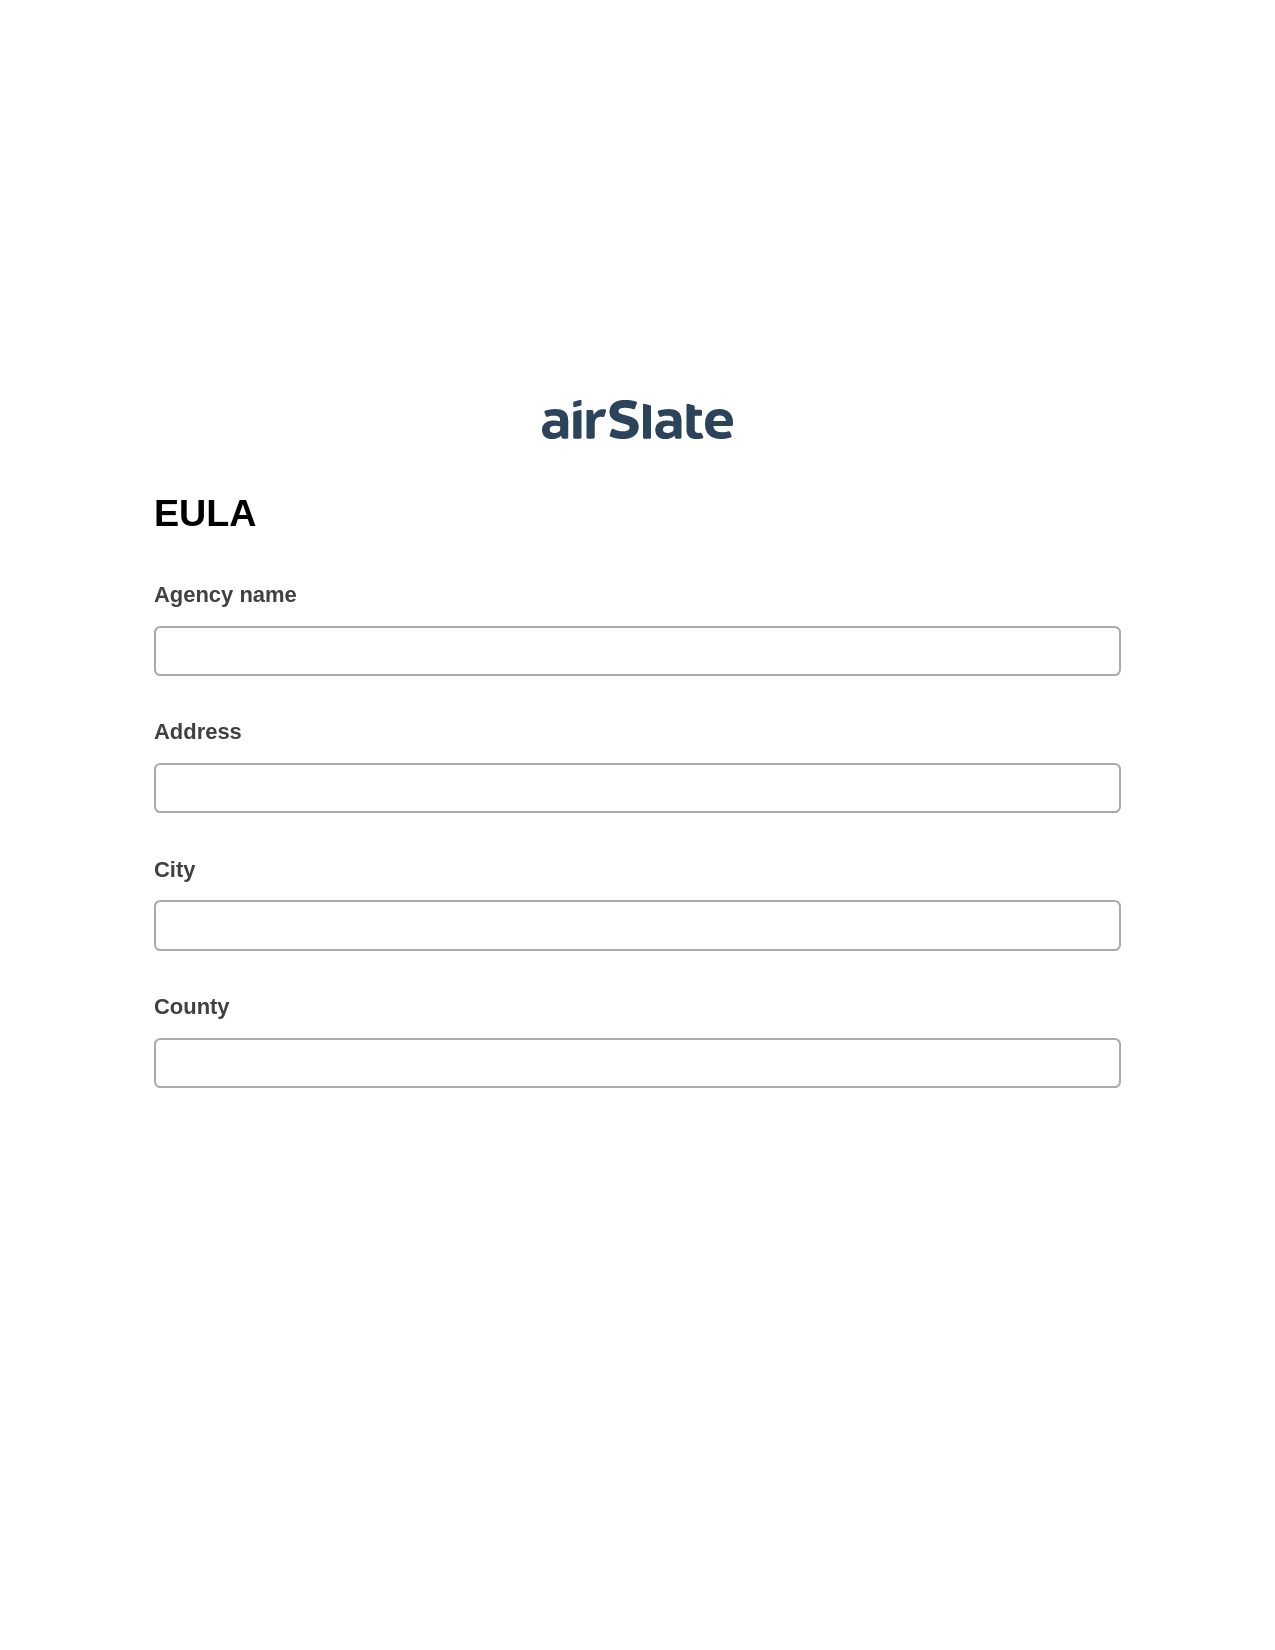 EULA Pre-fill from Google Sheet Dropdown Options Bot, Update Salesforce Record Bot, Webhook Postfinish Bot